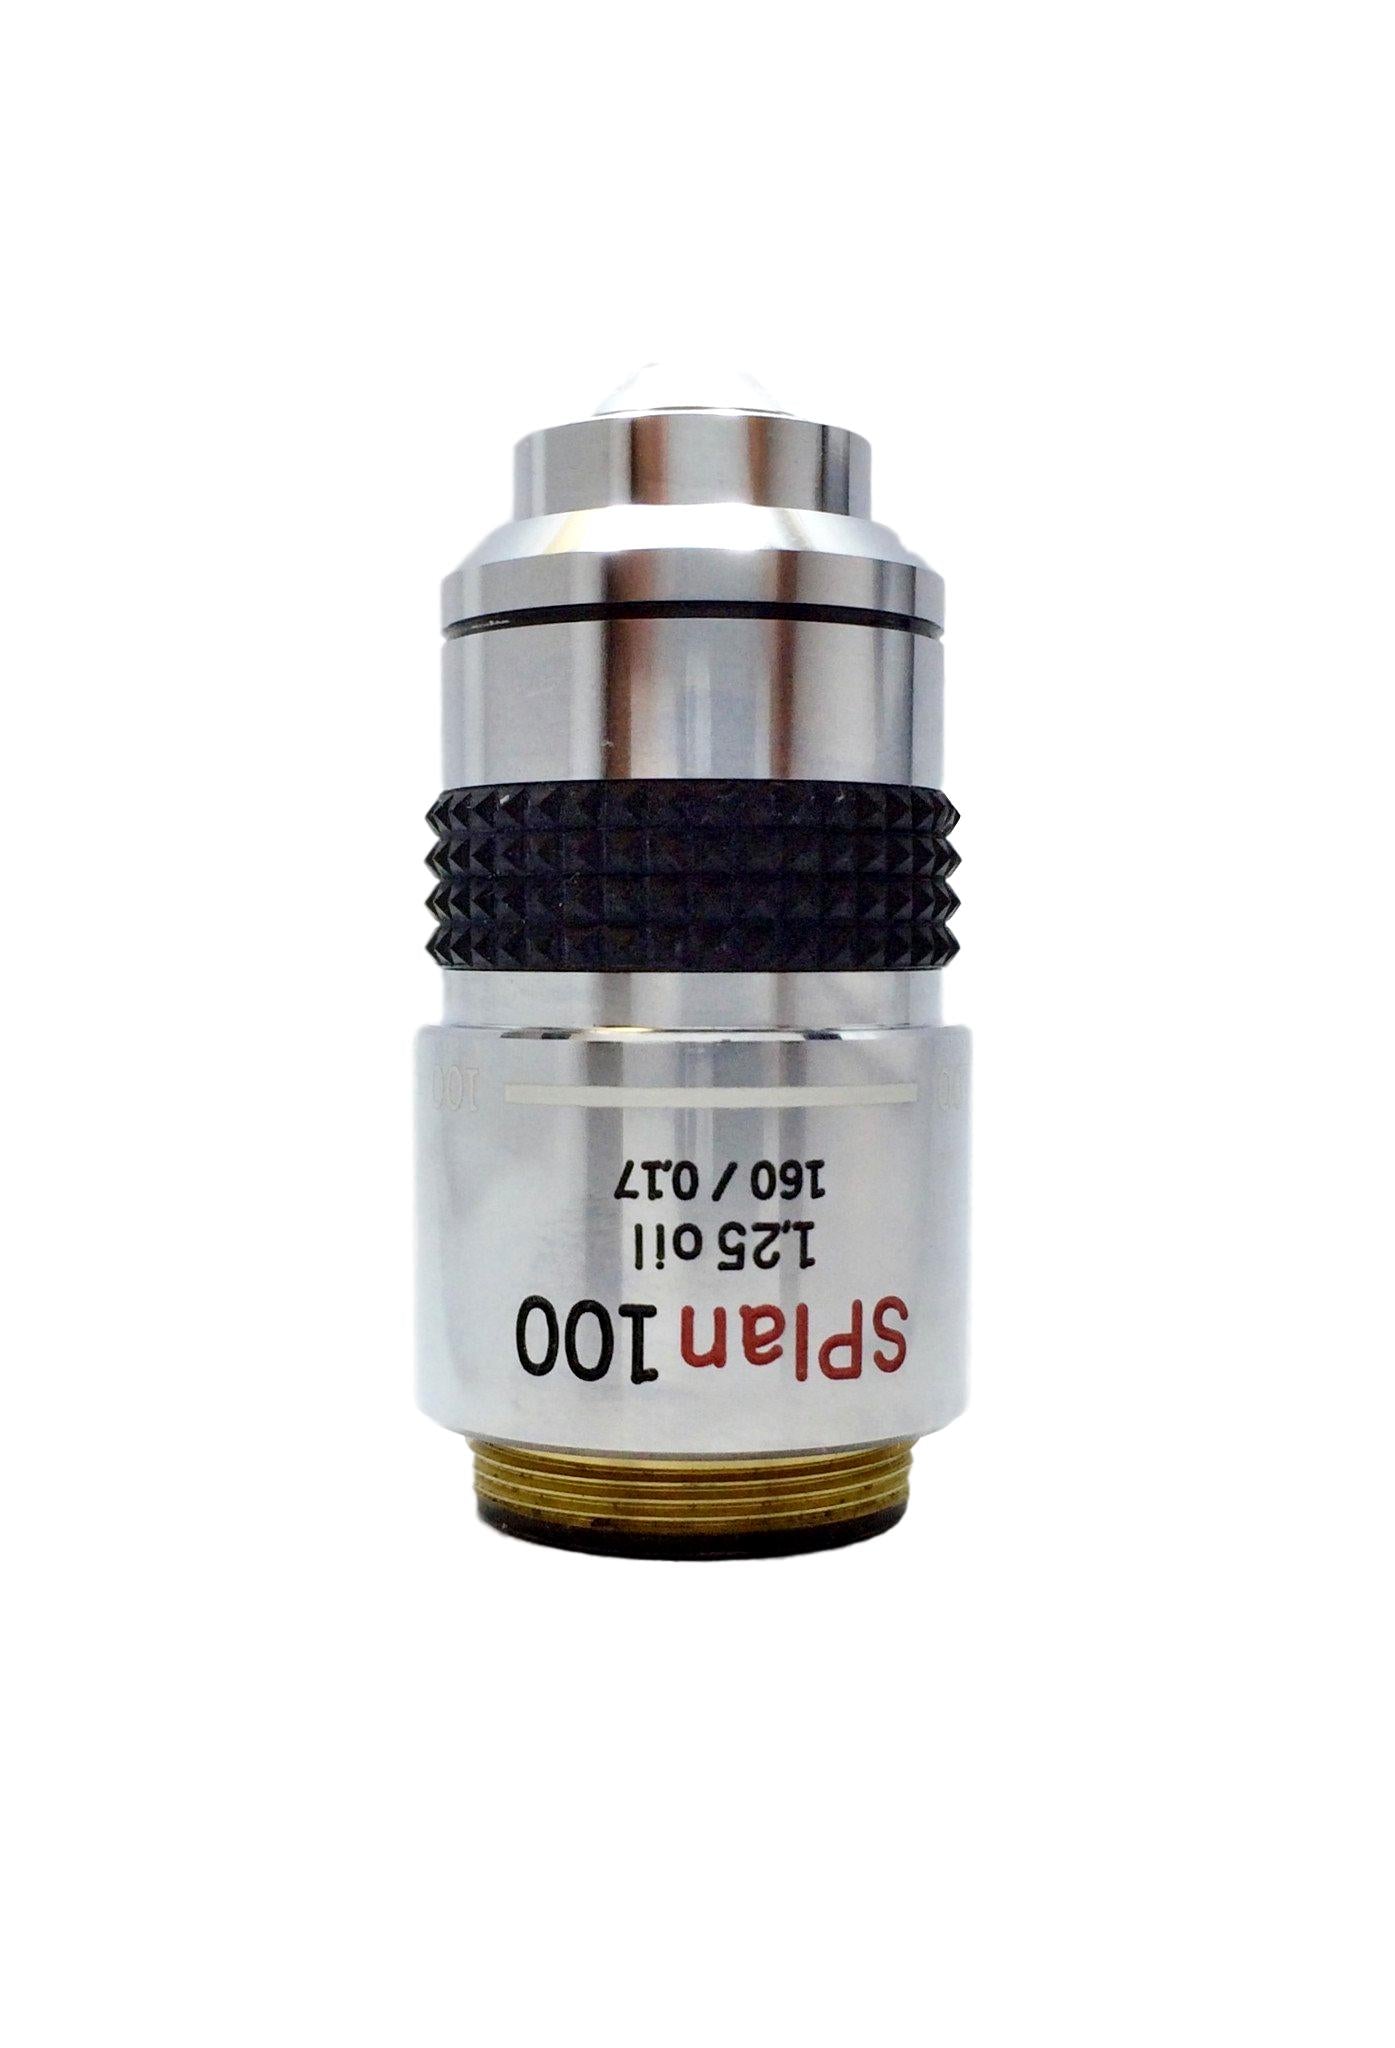 Olympus SPlan 100X Oil Microscope Objective